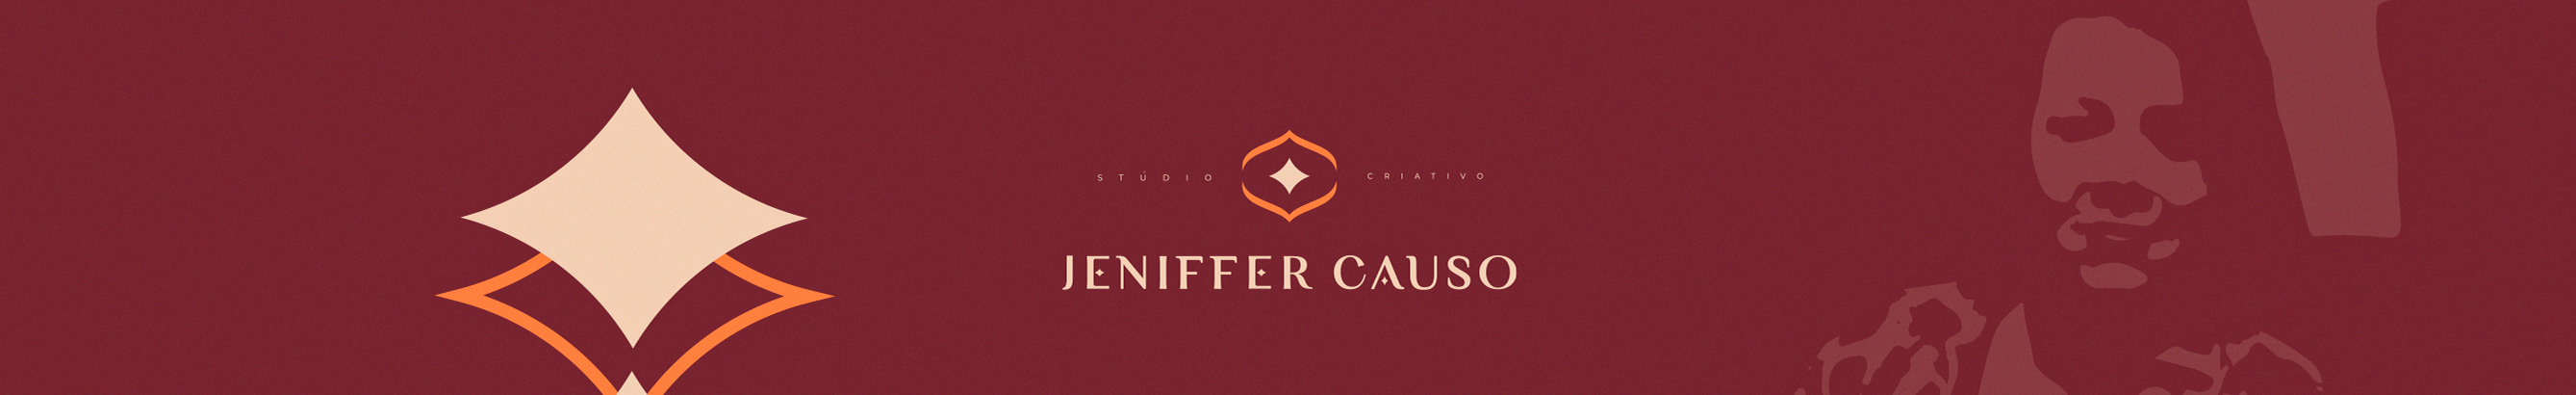 Banner de perfil de Jeniffer Causo